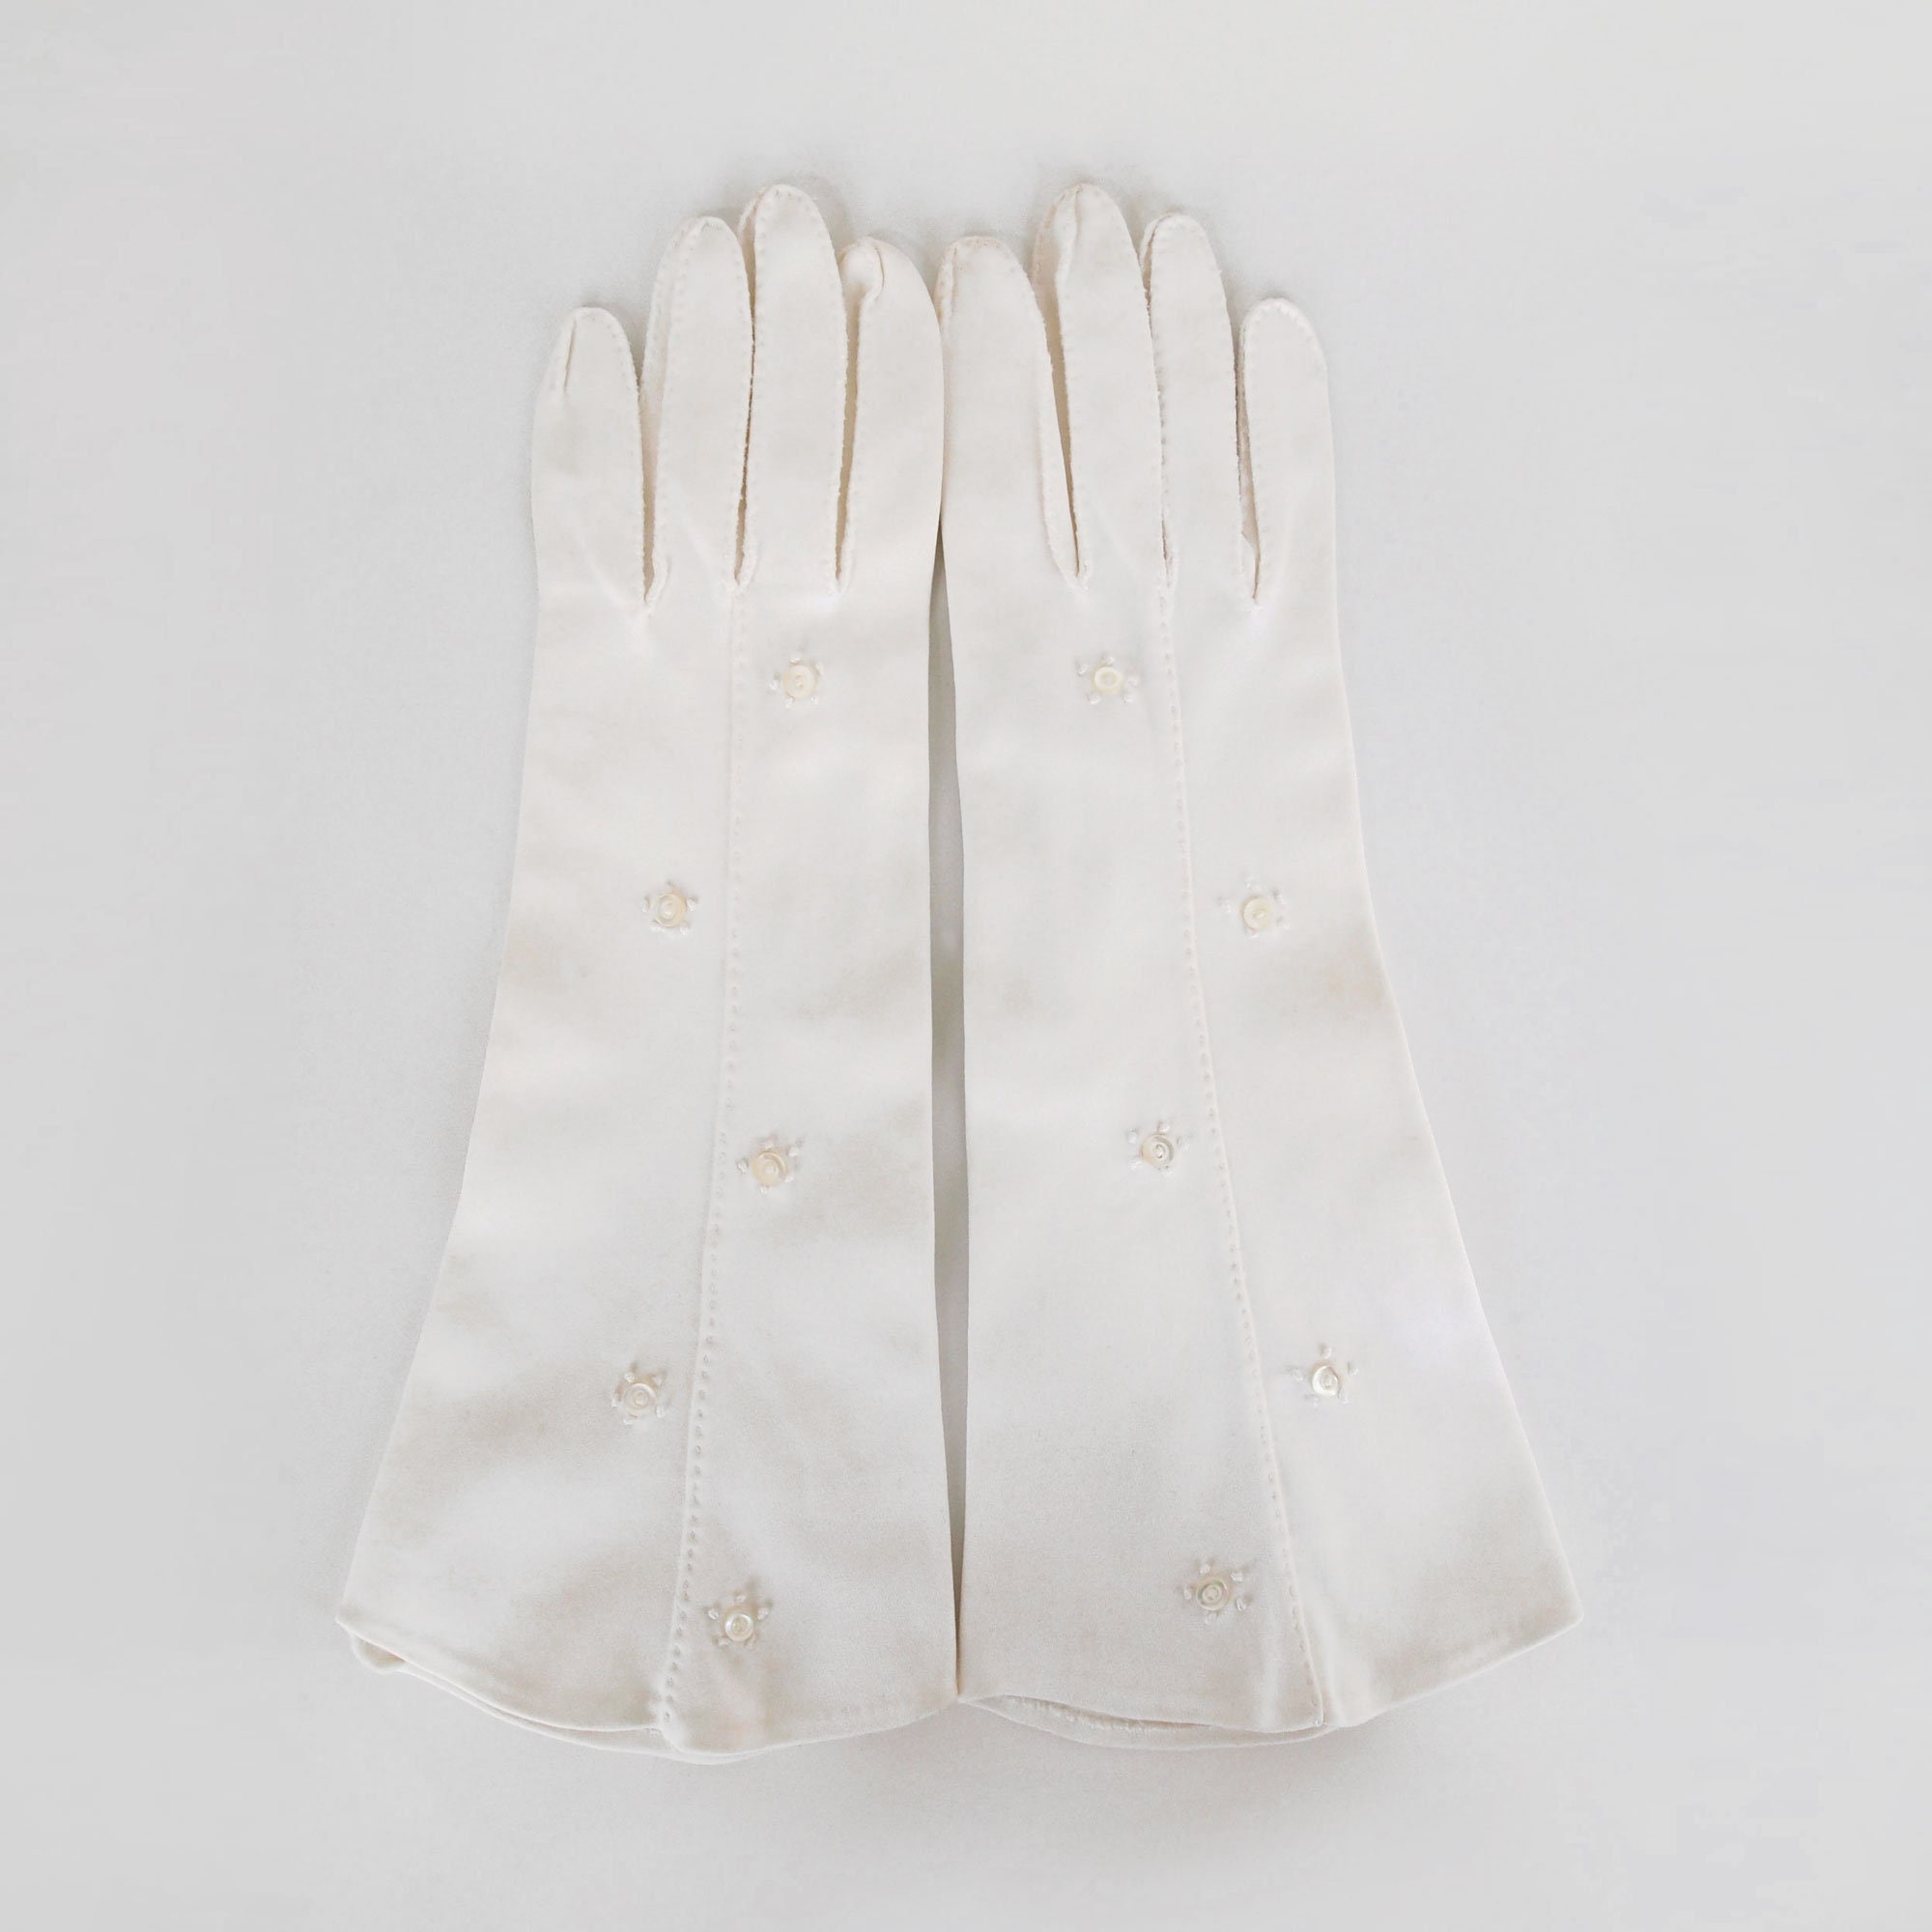 GRANDOE Gloves Vintage 1950s White Cotton Pearl Buttons Accessories